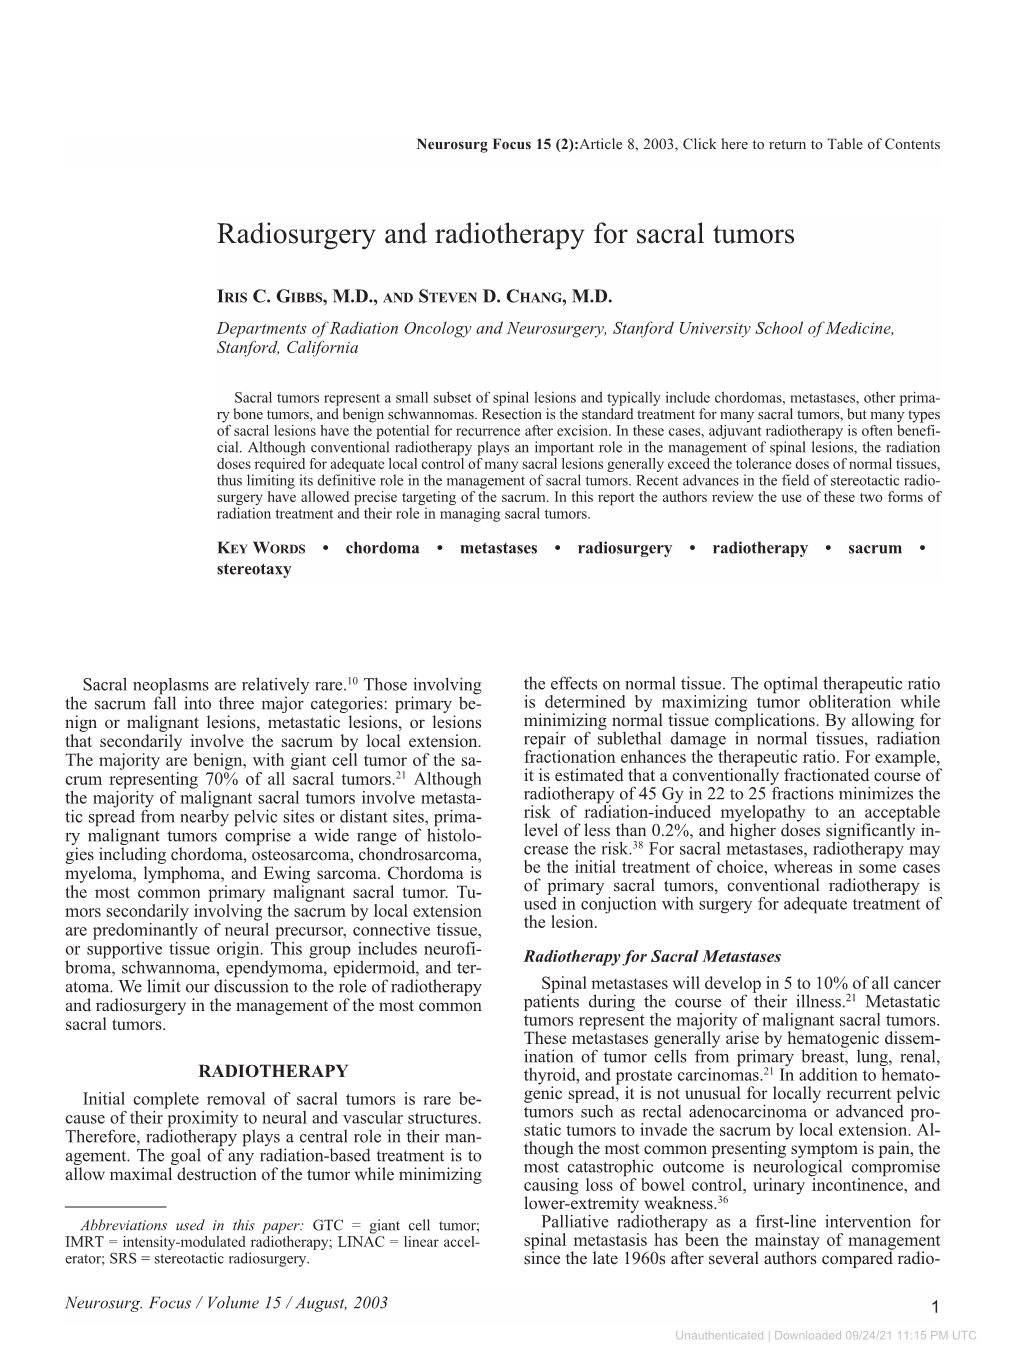 Radiosurgery and Radiotherapy for Sacral Tumors